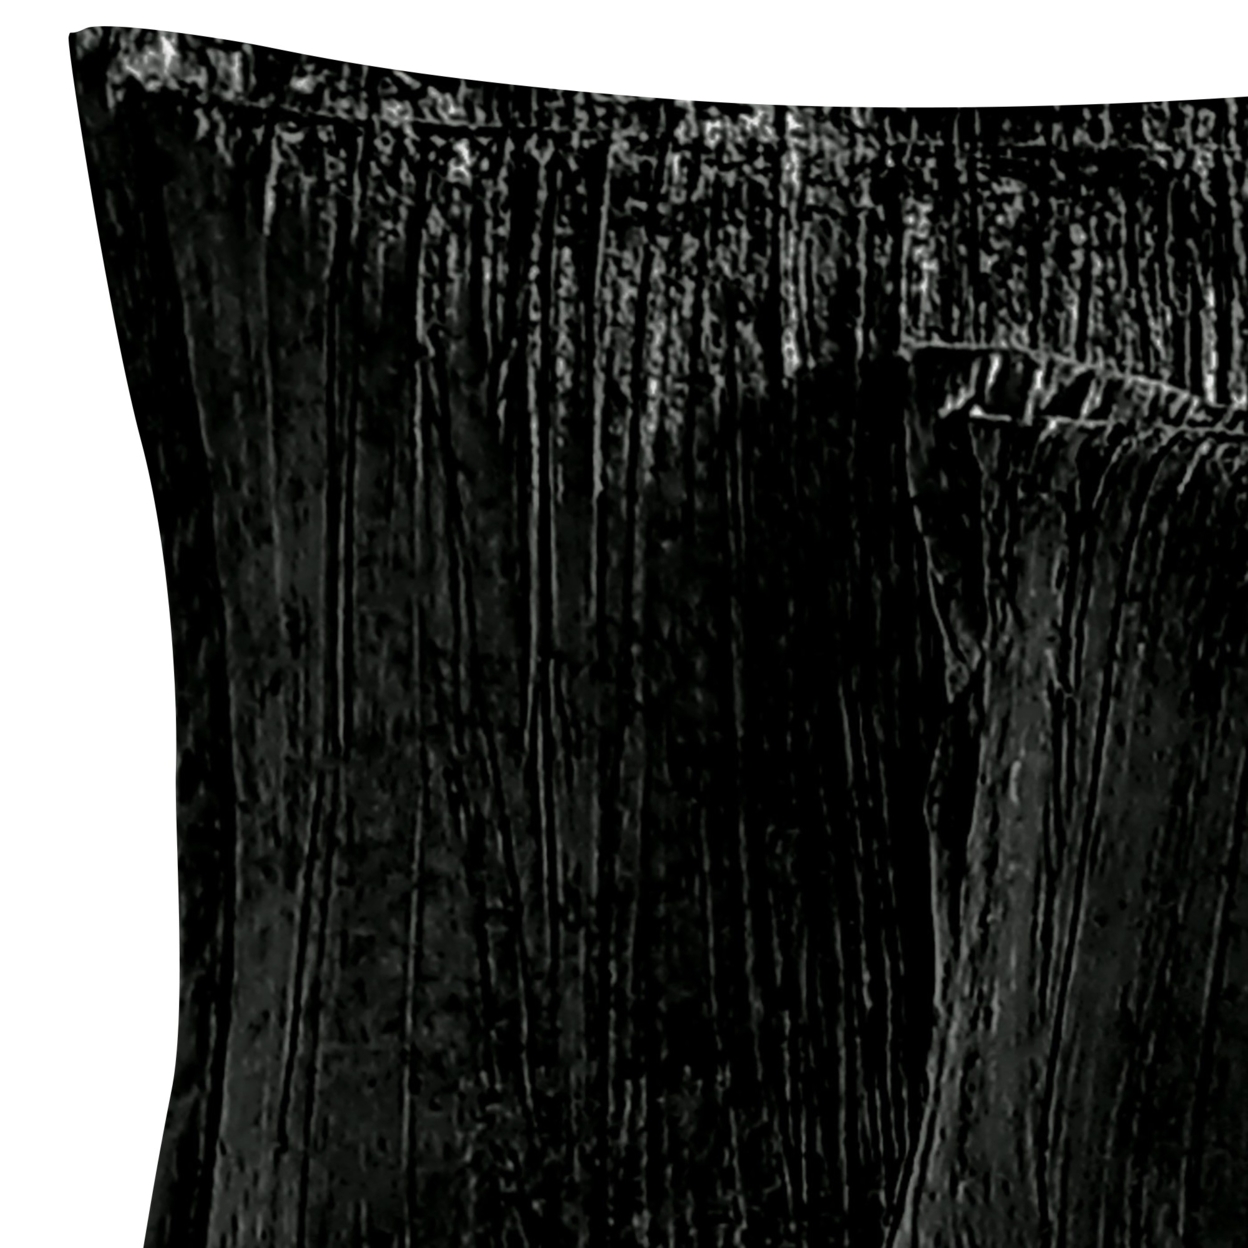 Jay 2 Piece Twin Comforter Set, Black Polyester Velvet, Deluxe Texture- Saltoro Sherpi